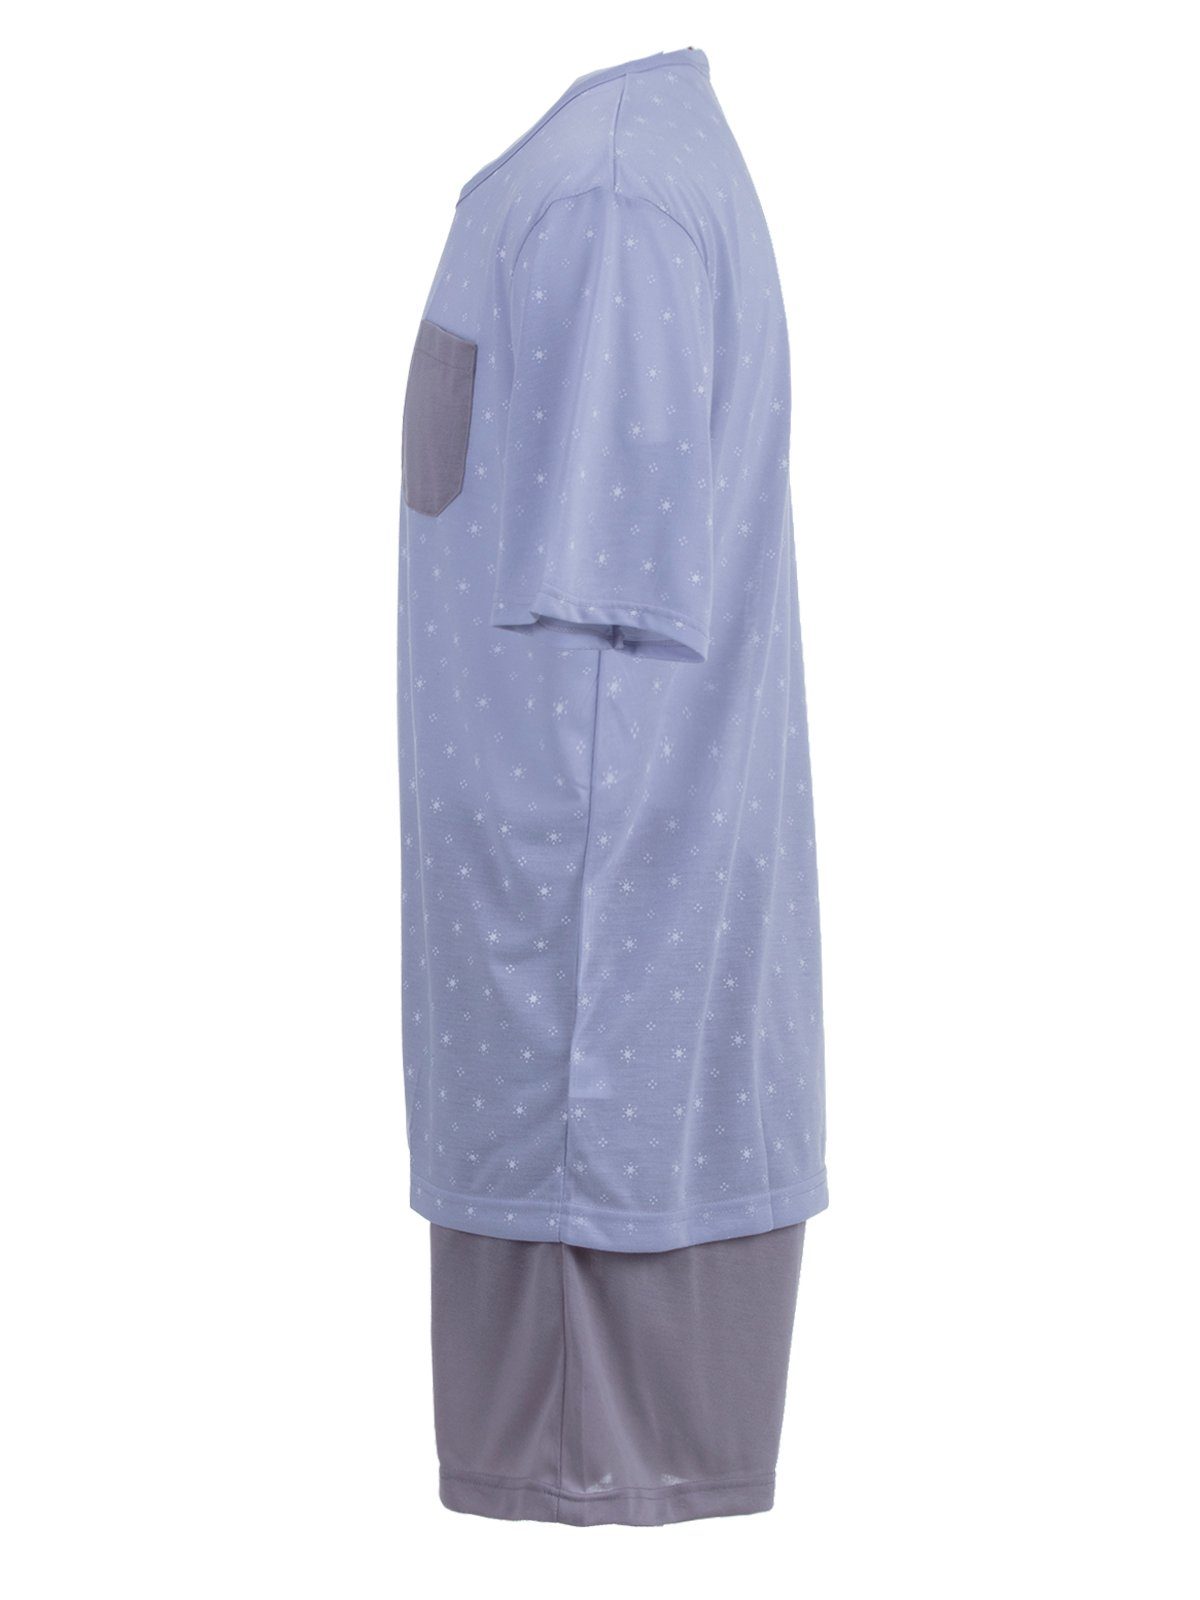 Schlafanzug grau Tasche Lucky Sonne - Shorty Set Pyjama